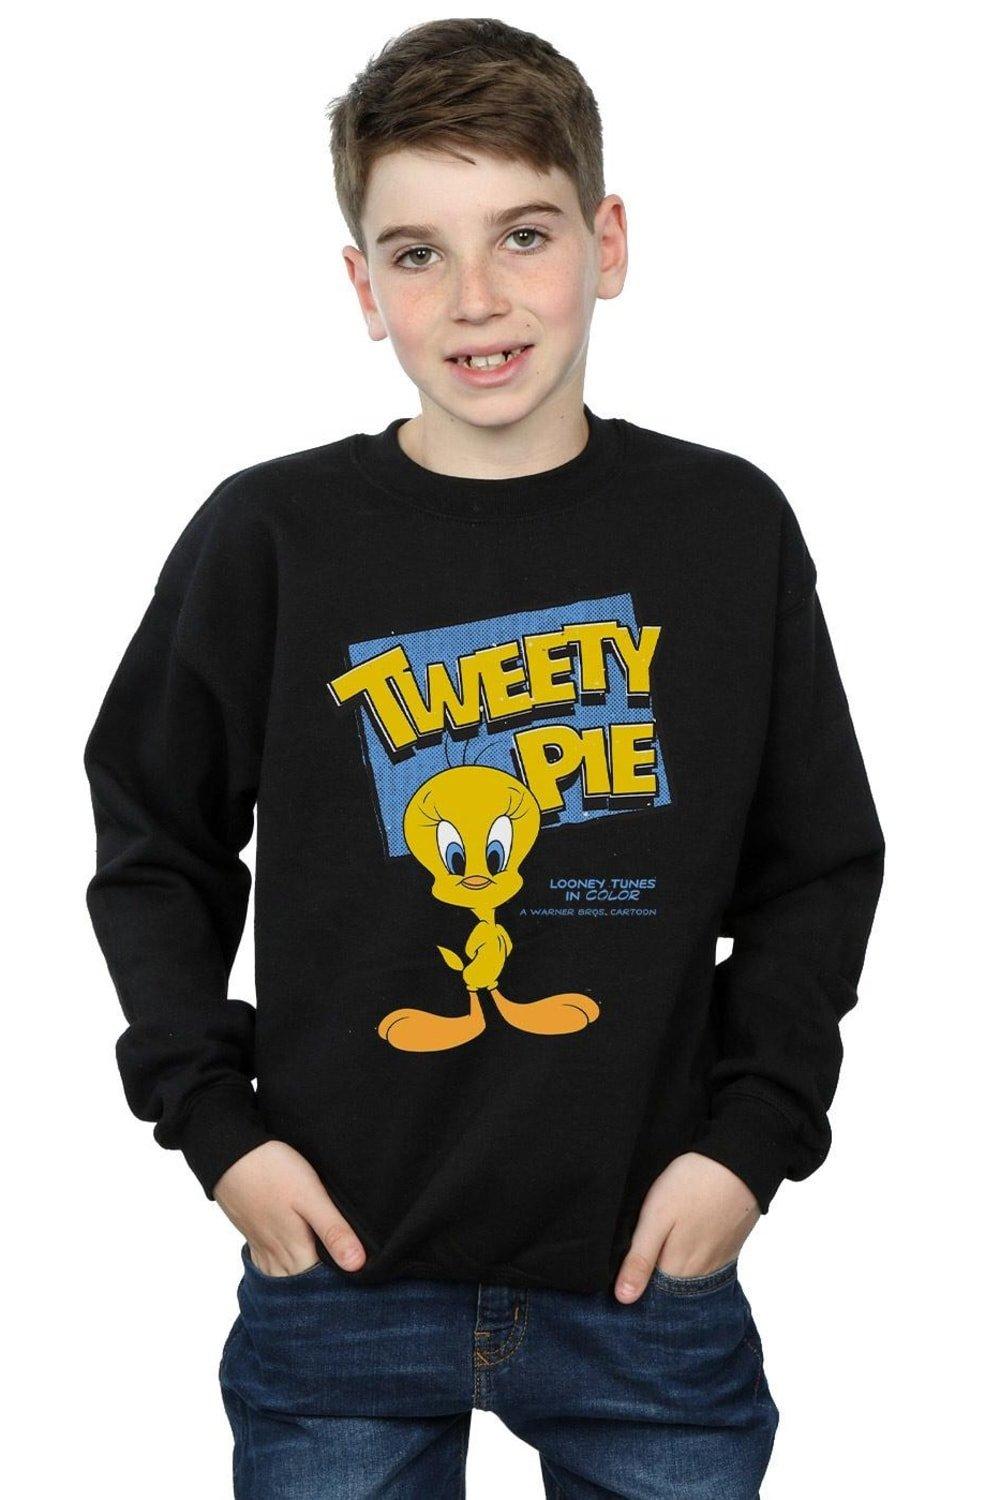 Classic Tweety Pie Sweatshirt